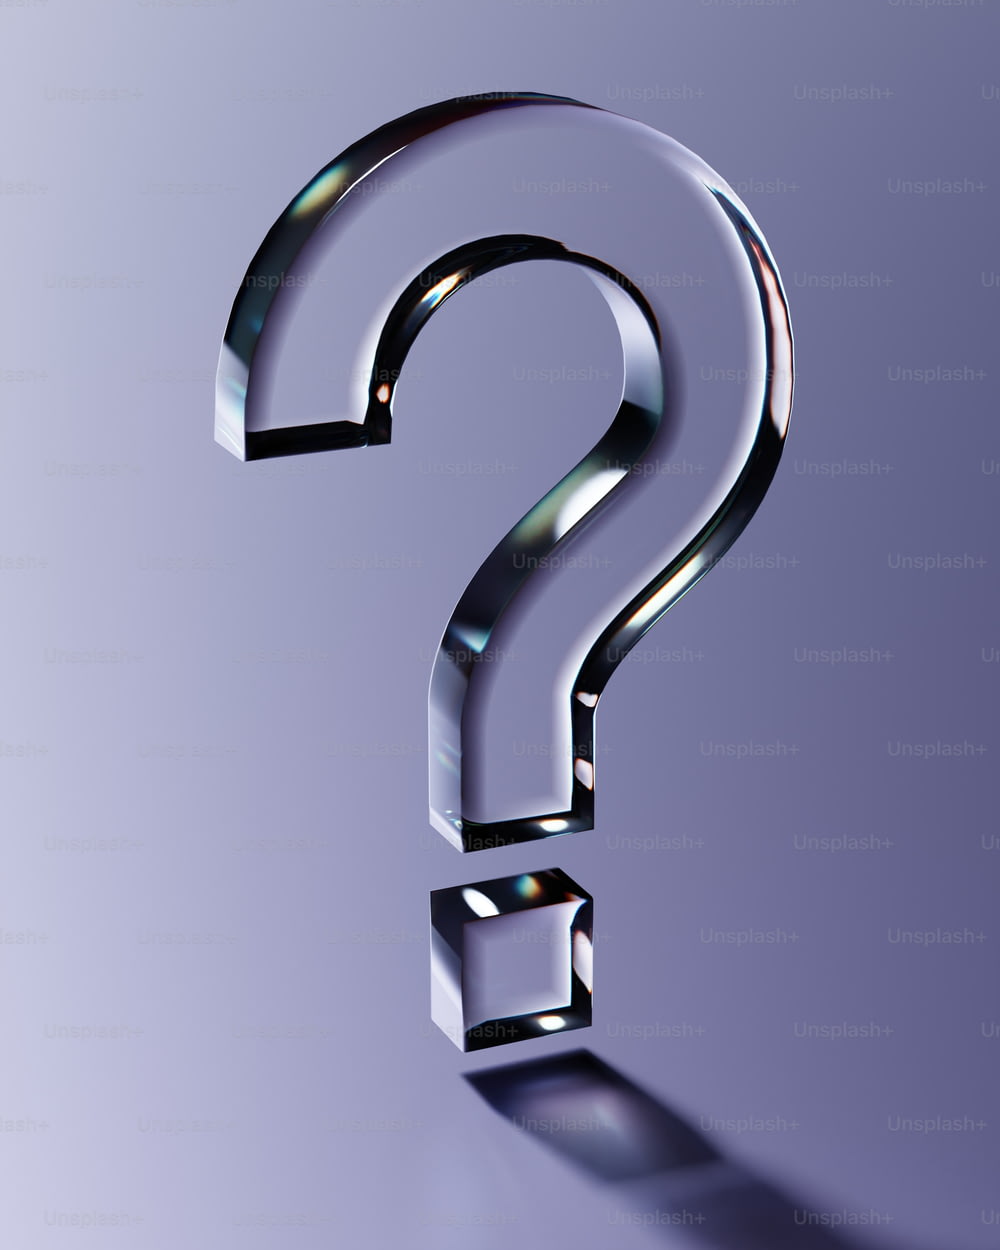 a shiny question mark on a purple background